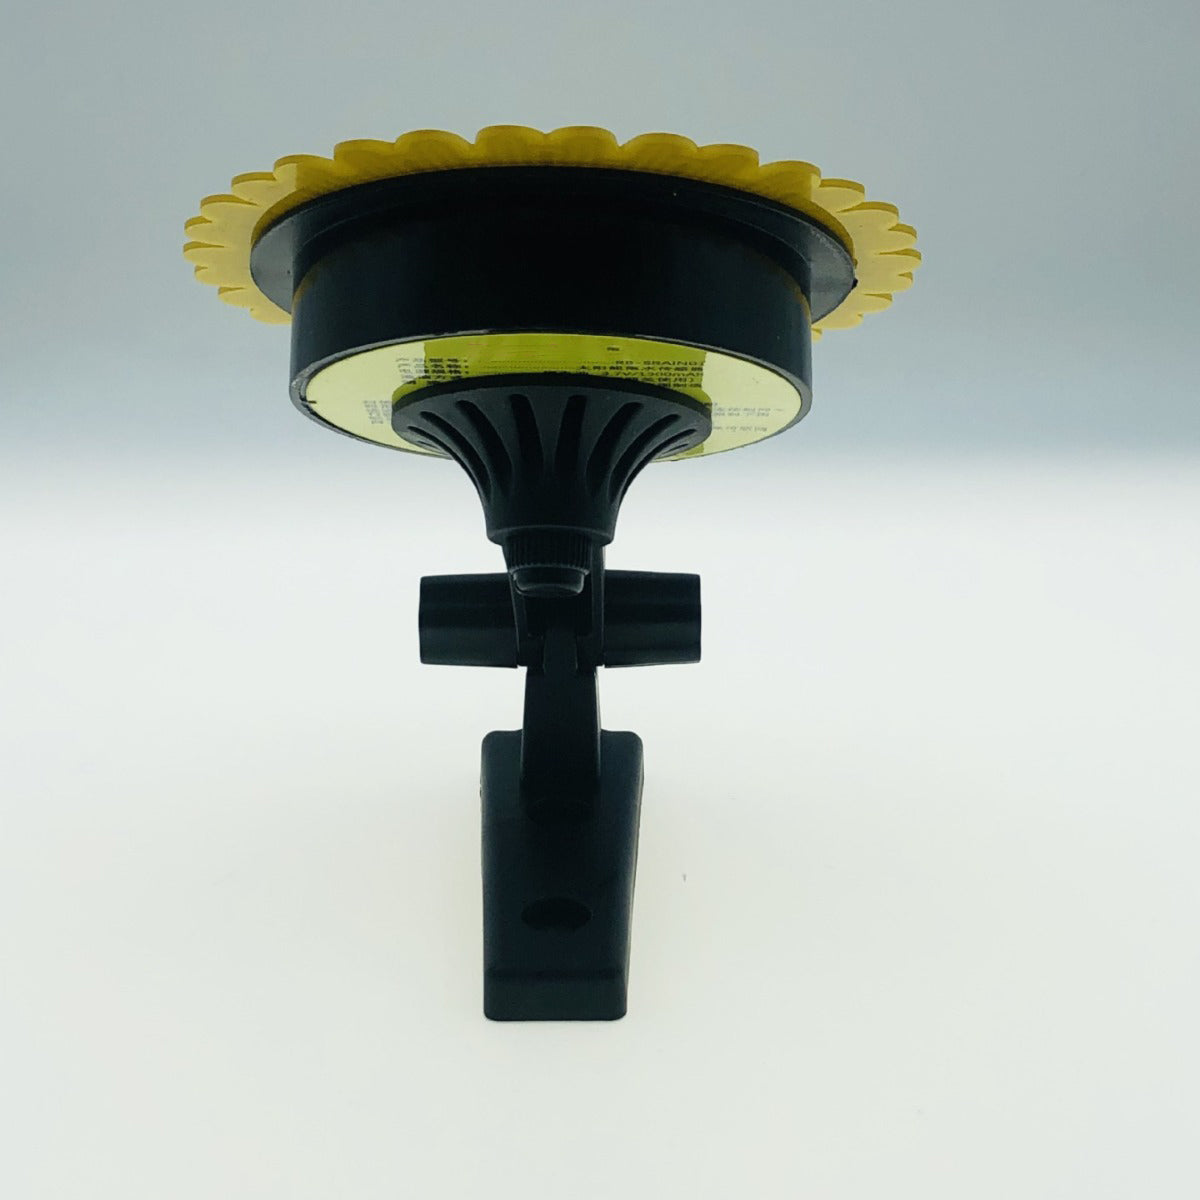 Tuya Smart Solar-Powered Rainwater Sensor